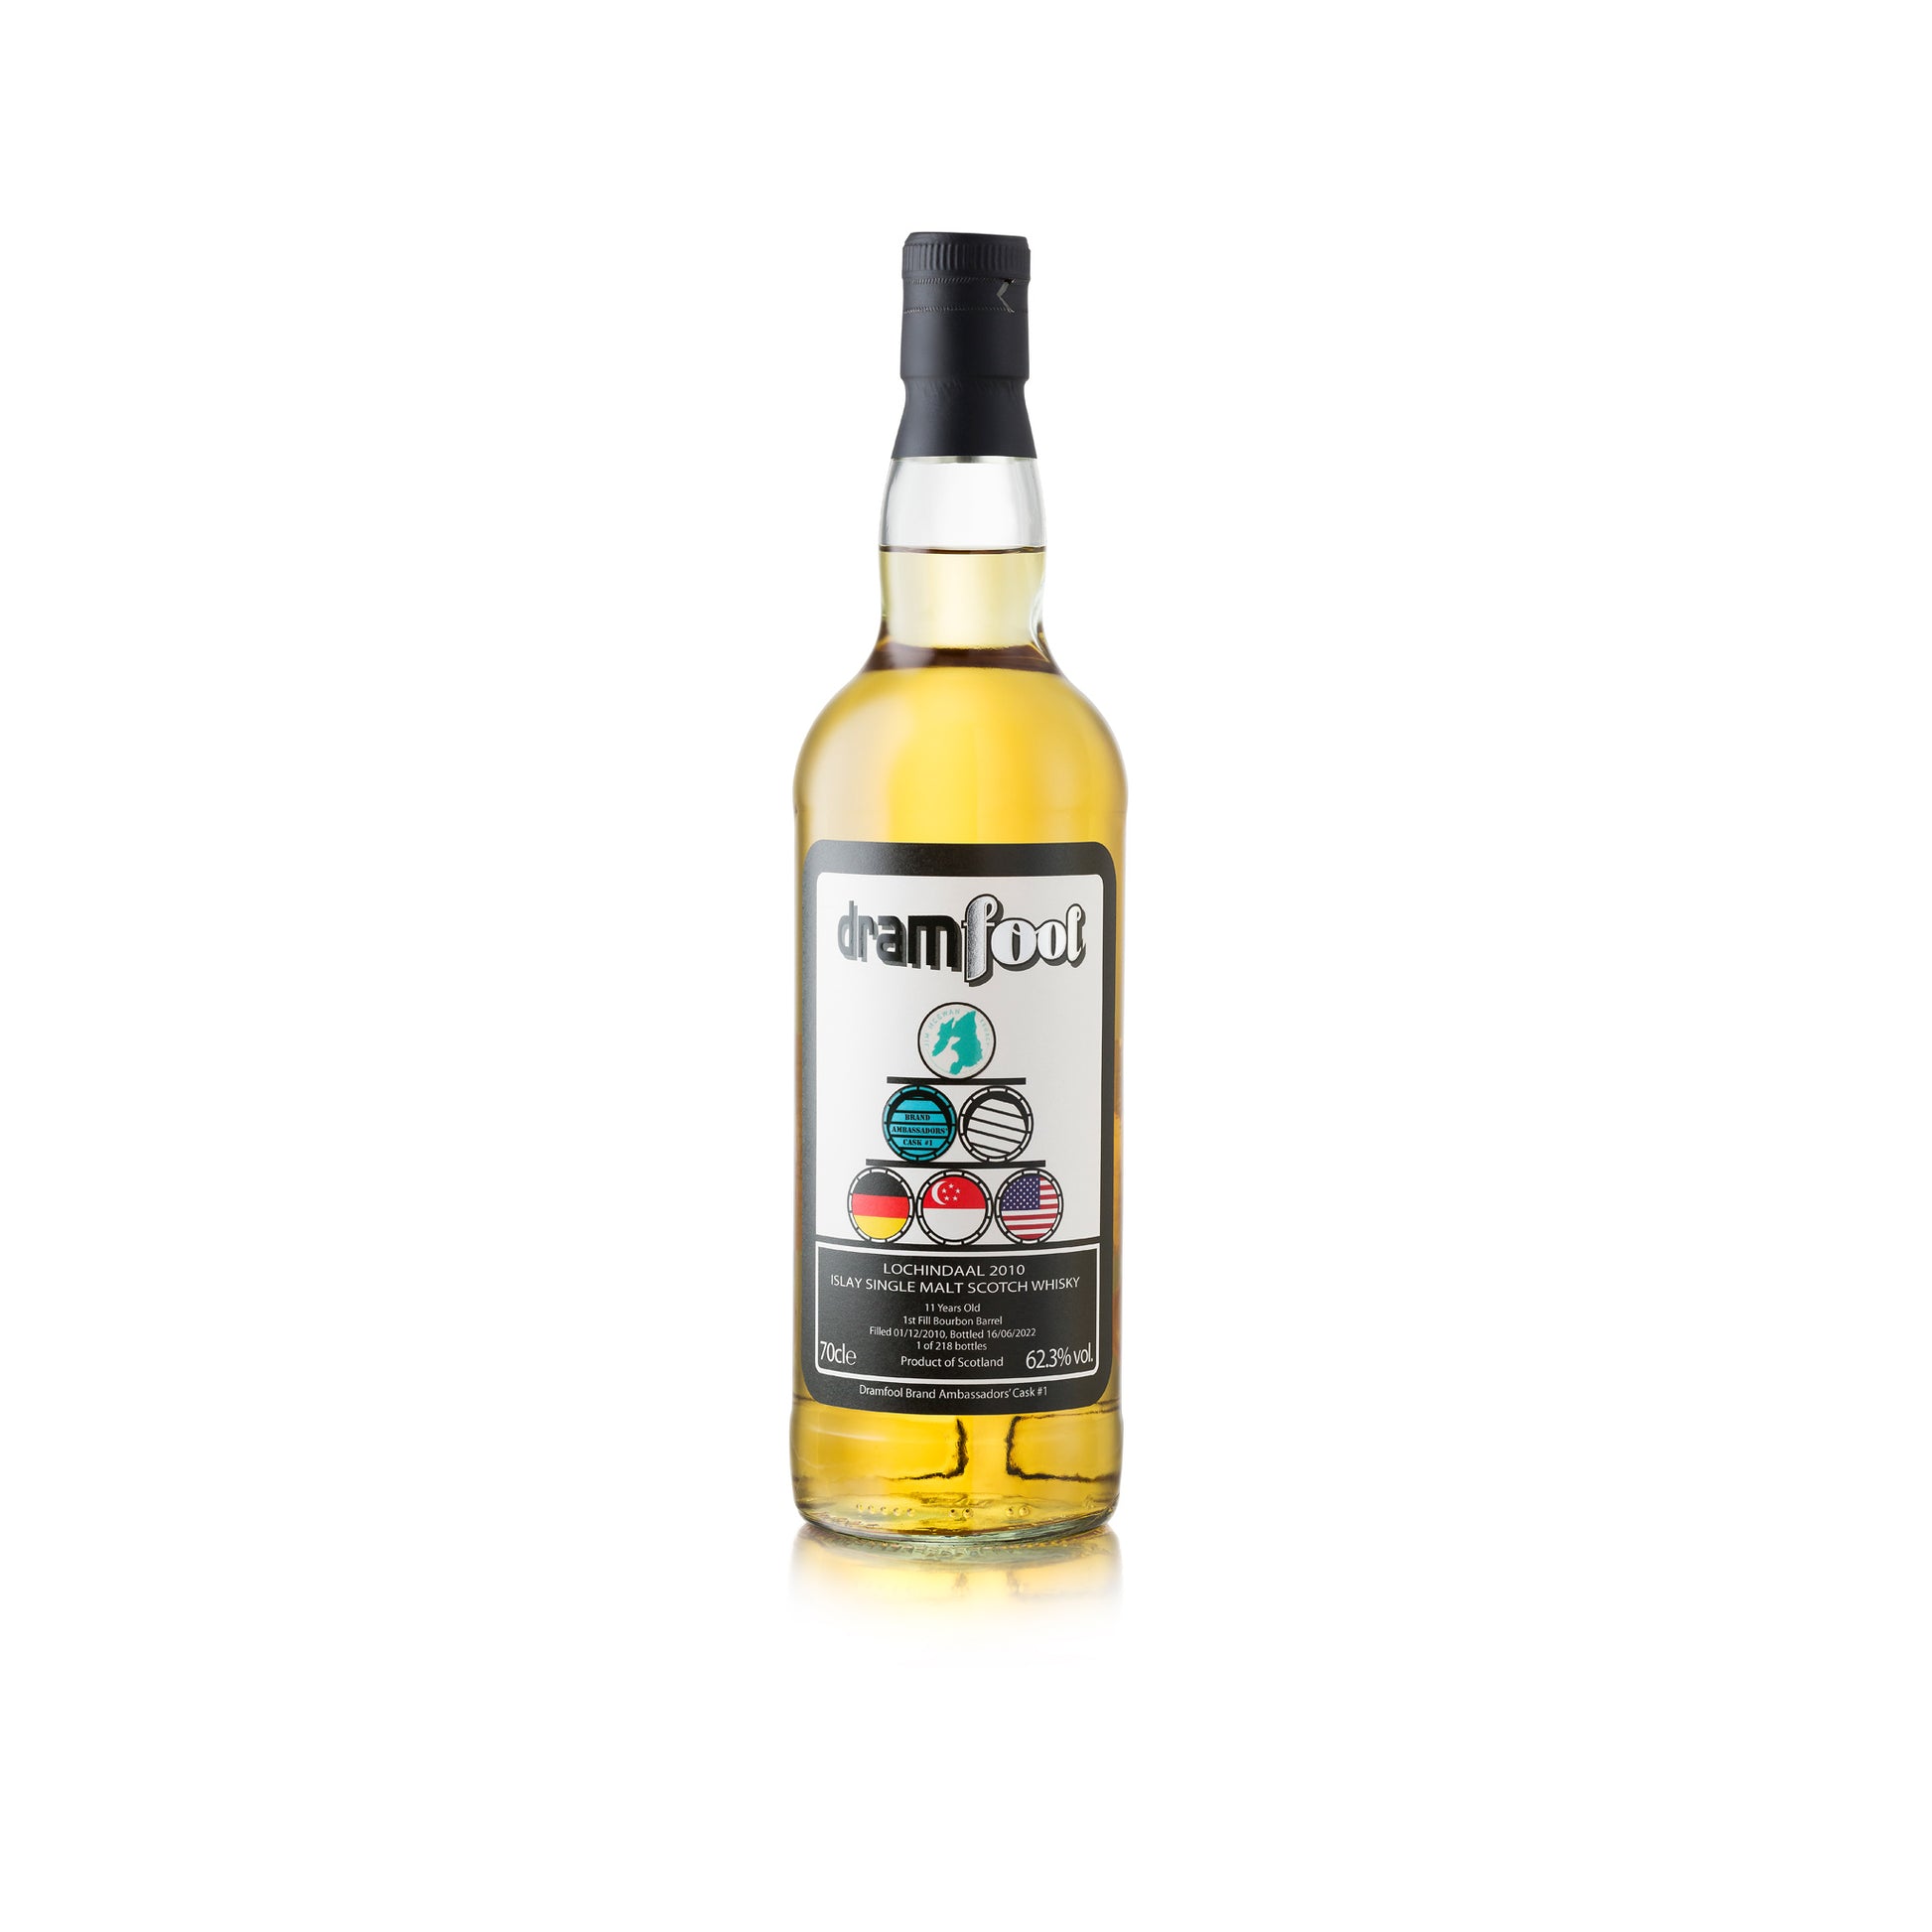 Lochindaal 2010 Dramfool Brand Ambassadors' Cask #1 - Whiskylander